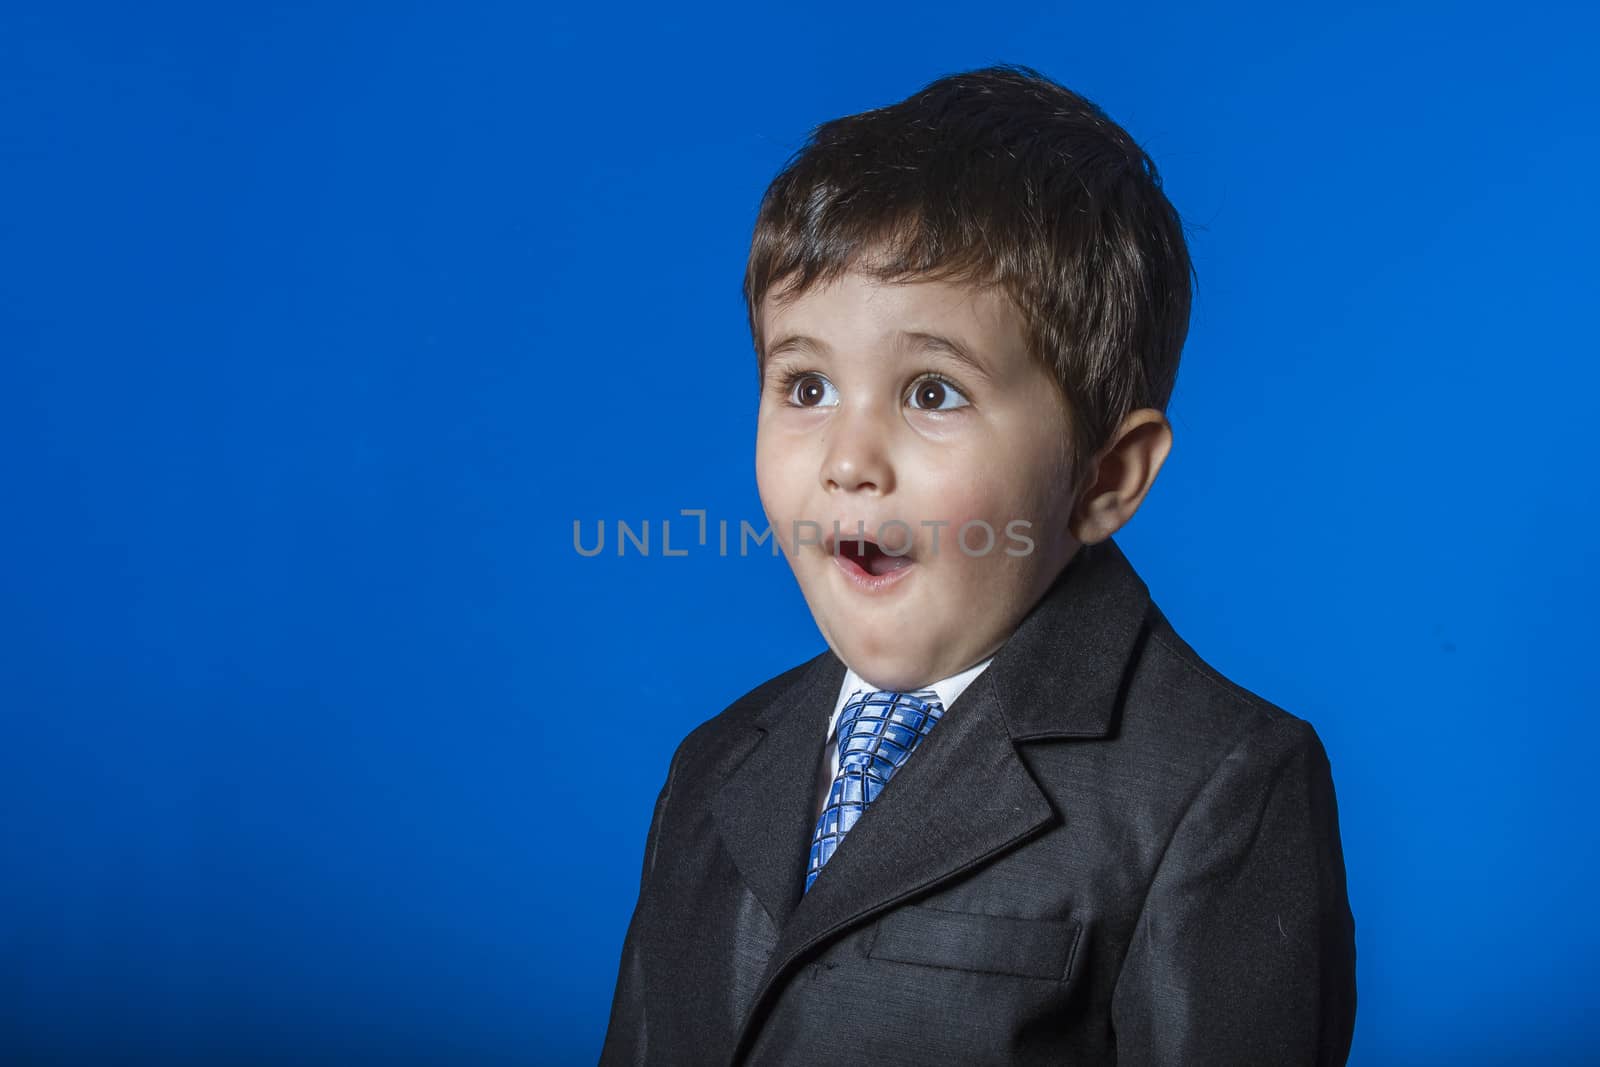 Leader, cute little boy portrait over blue chroma background by FernandoCortes